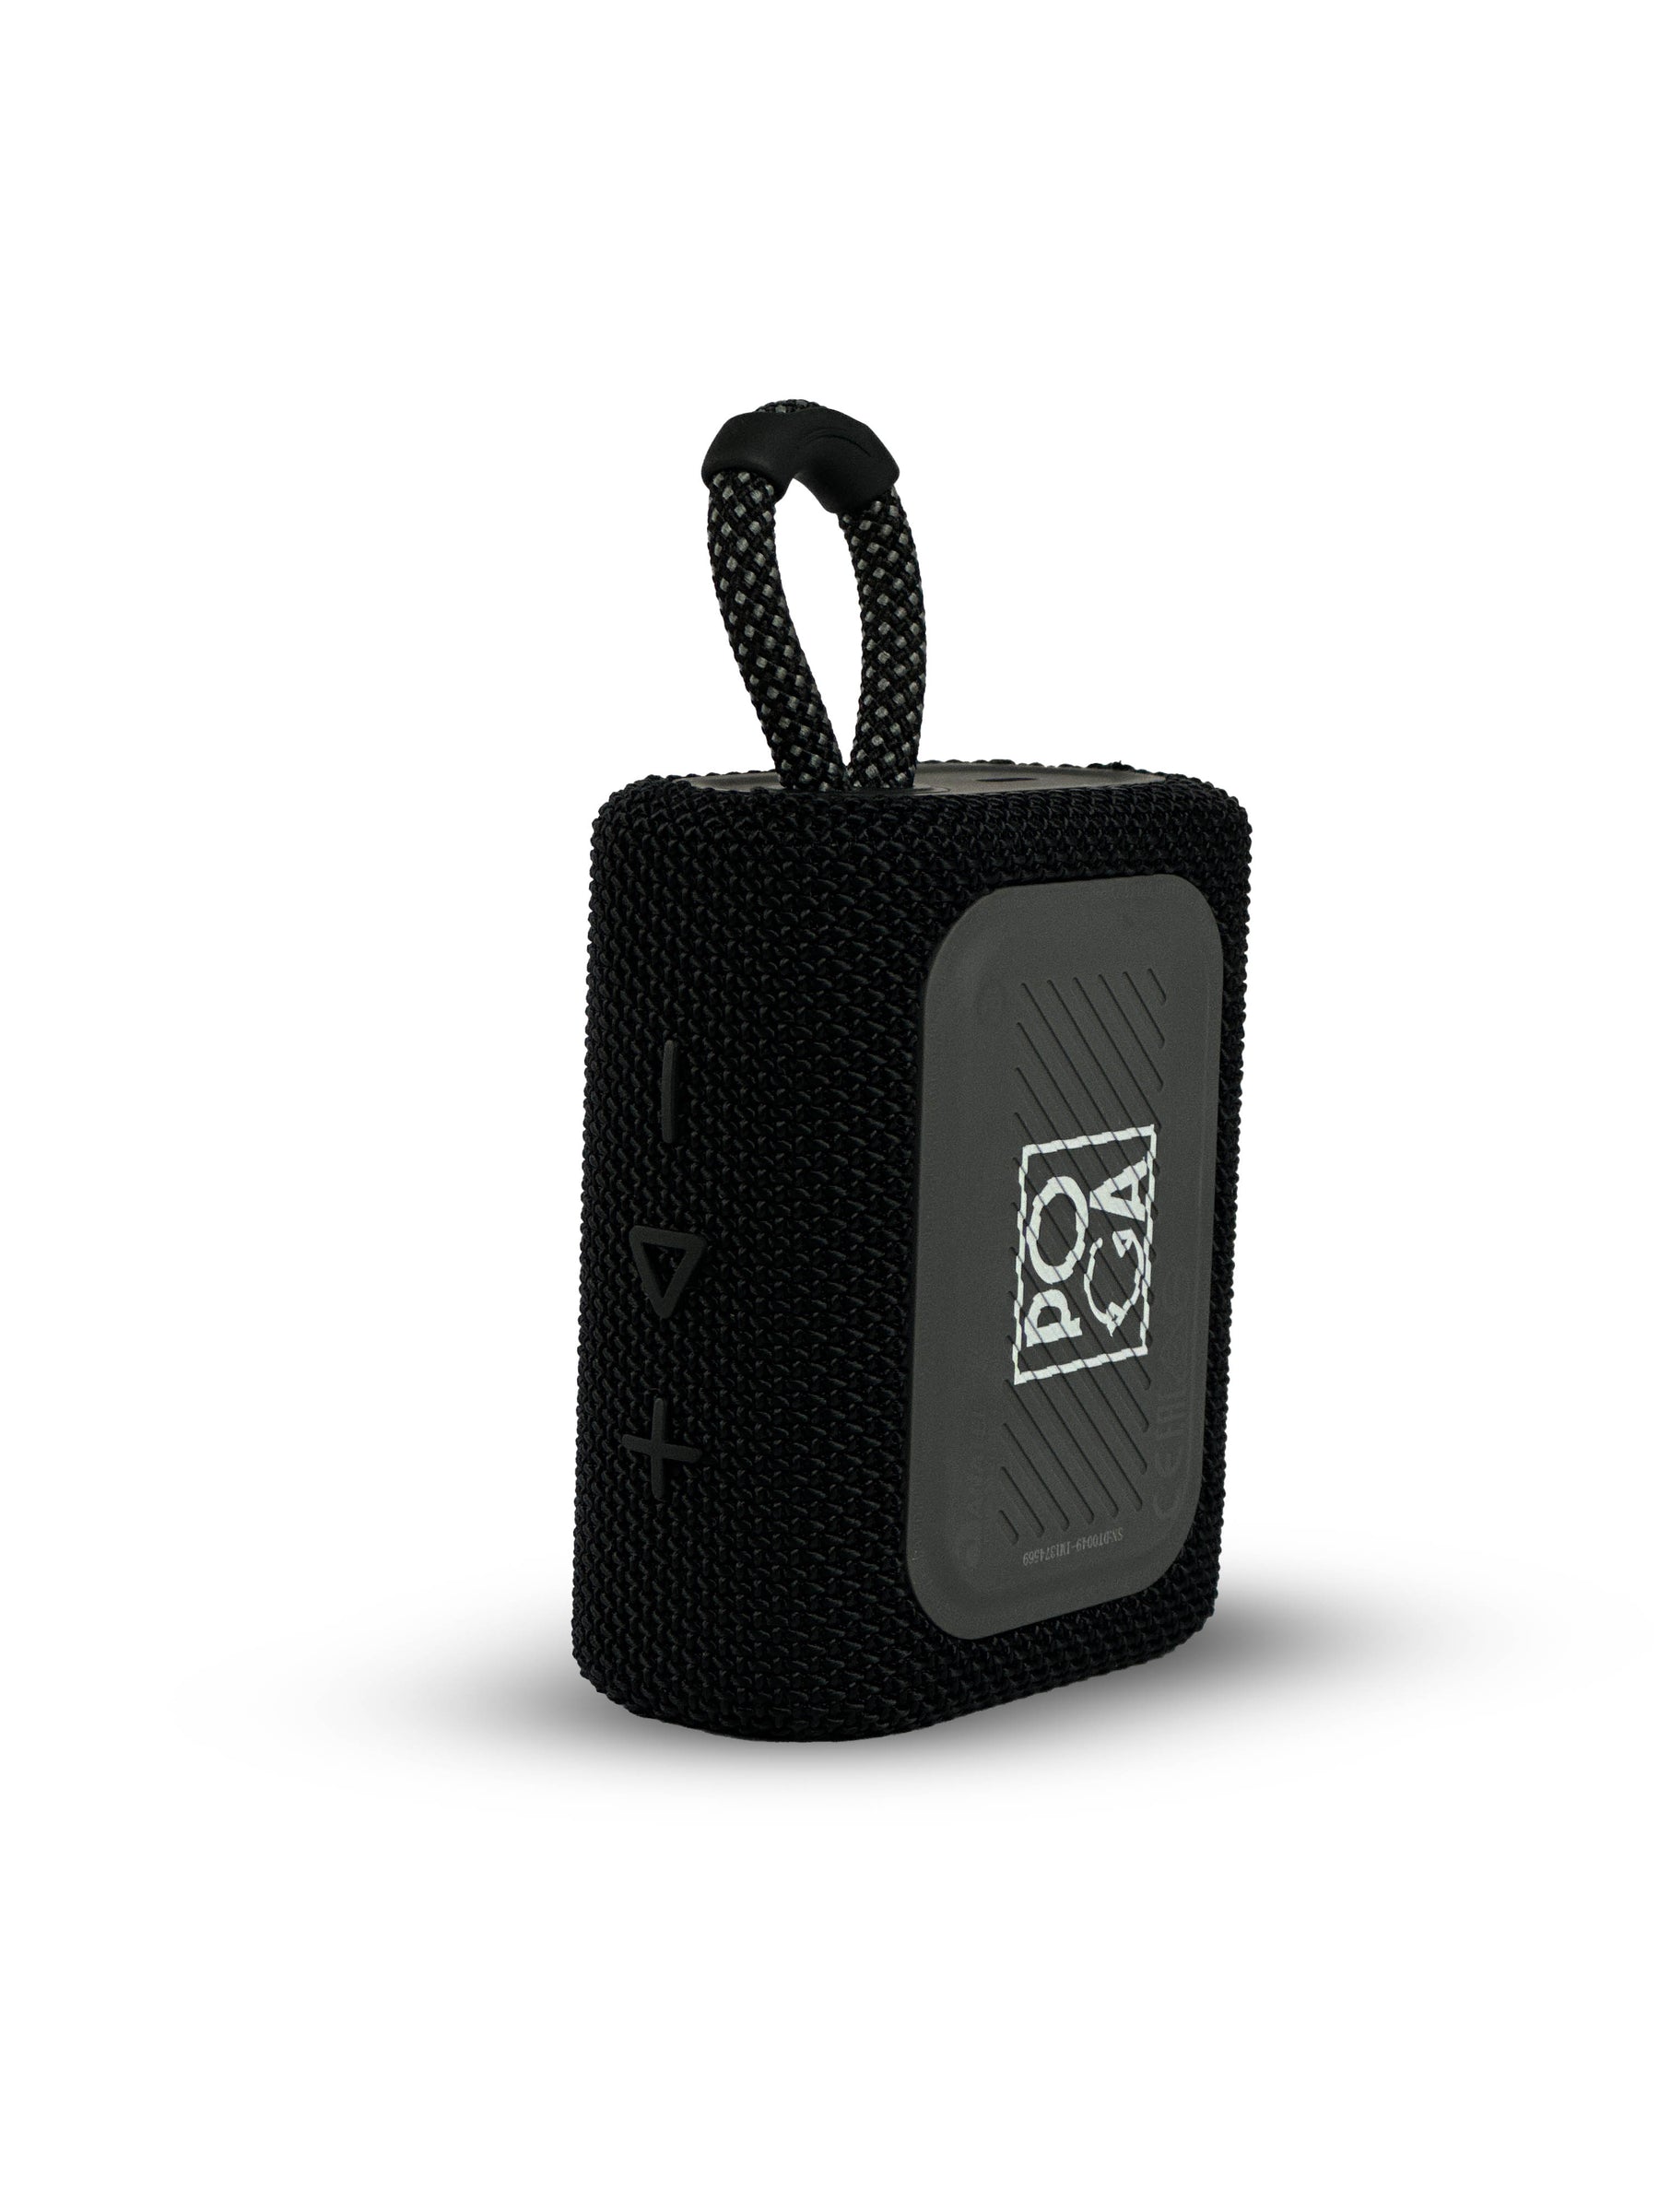 JBL Go 3 Portable Bluetooth Speaker Overview 